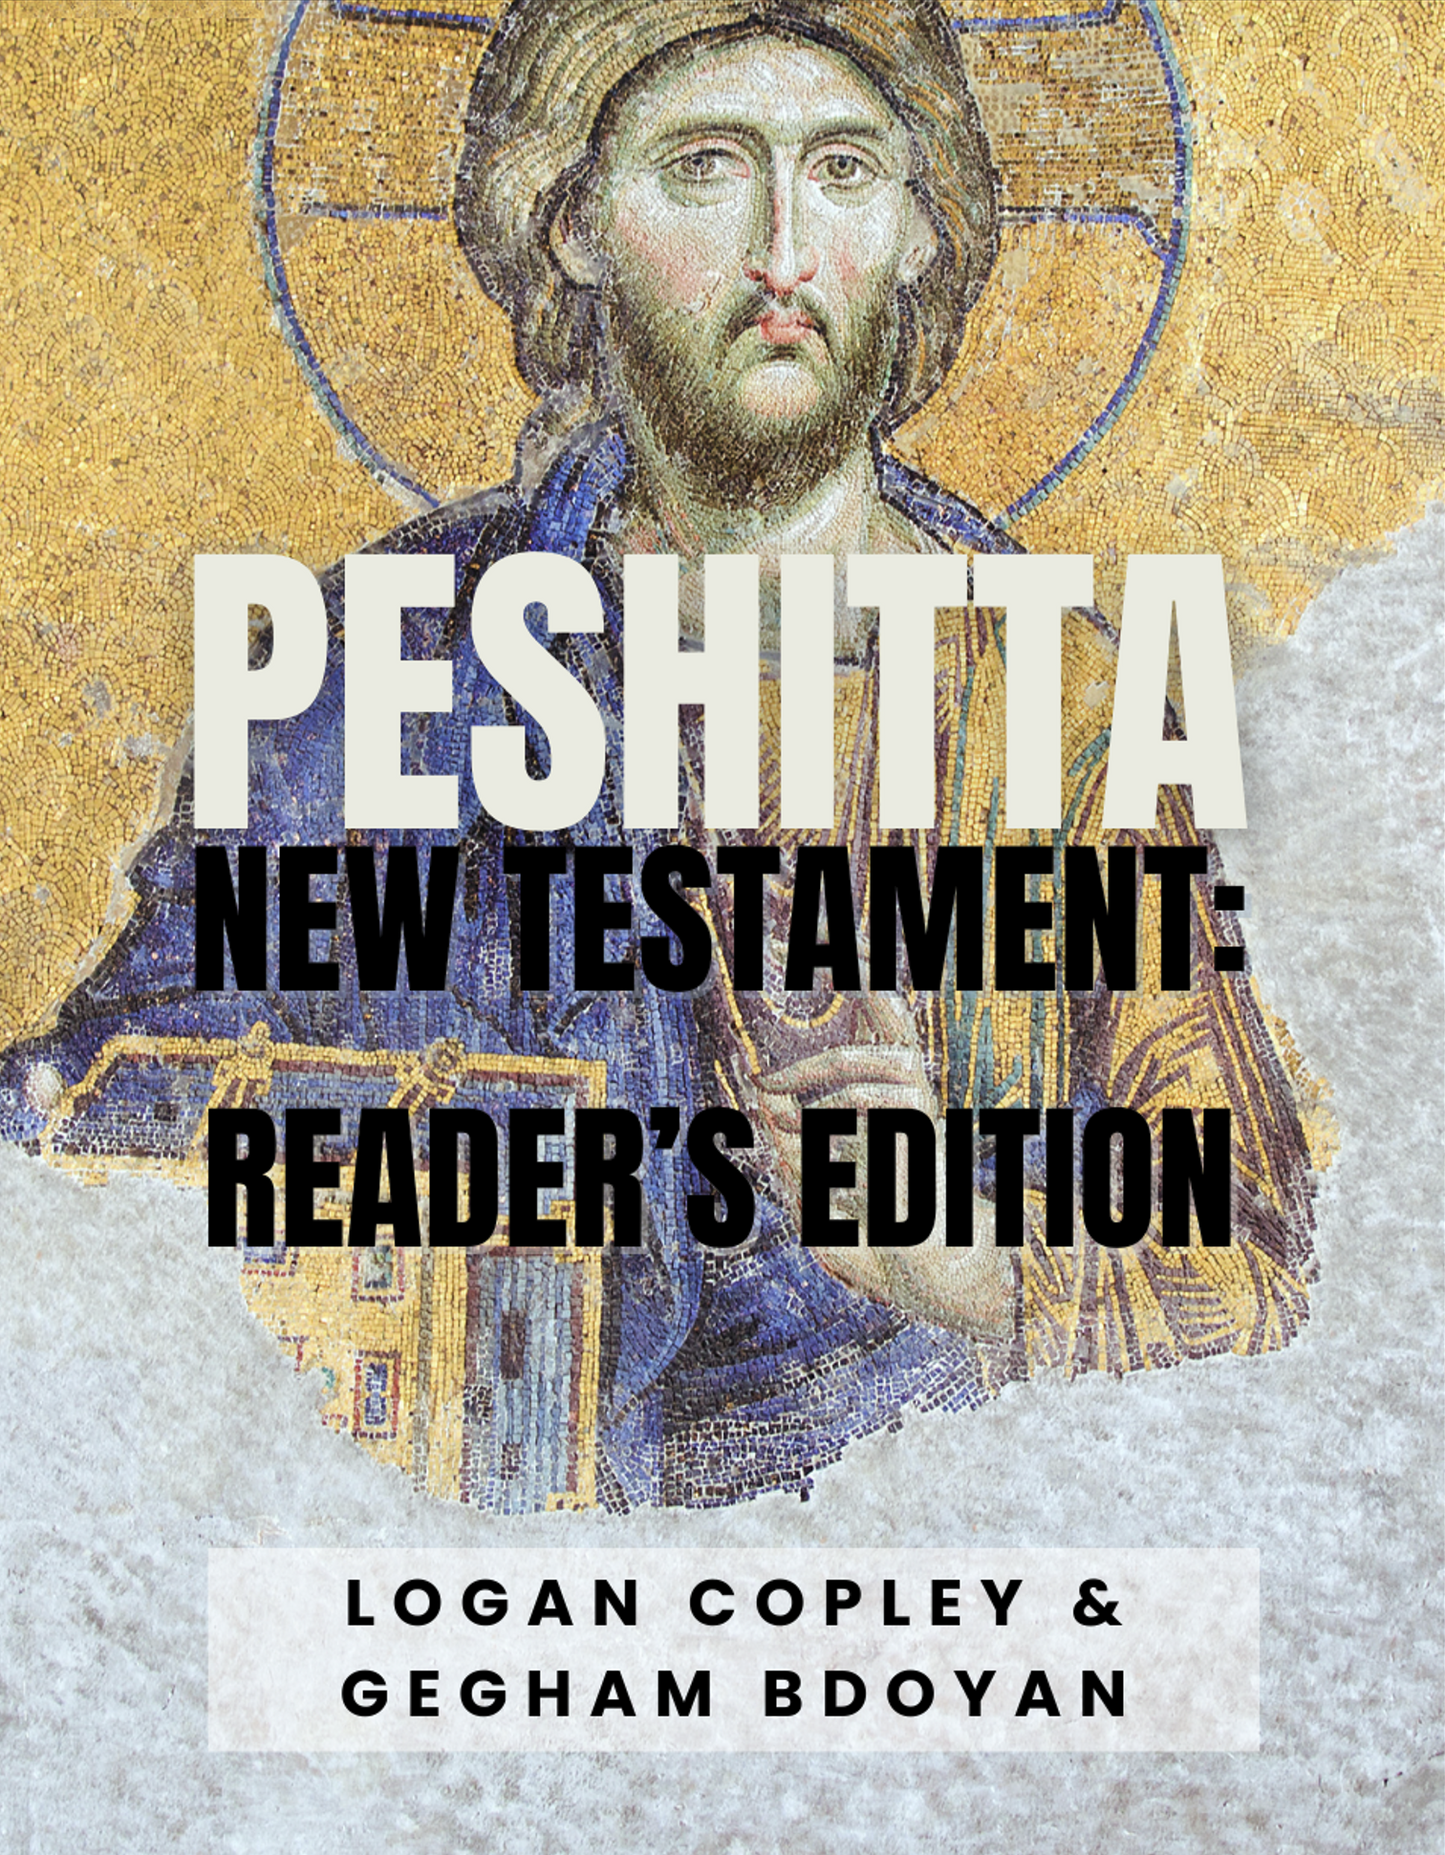 Peshitta New Testament: Reader's Edition